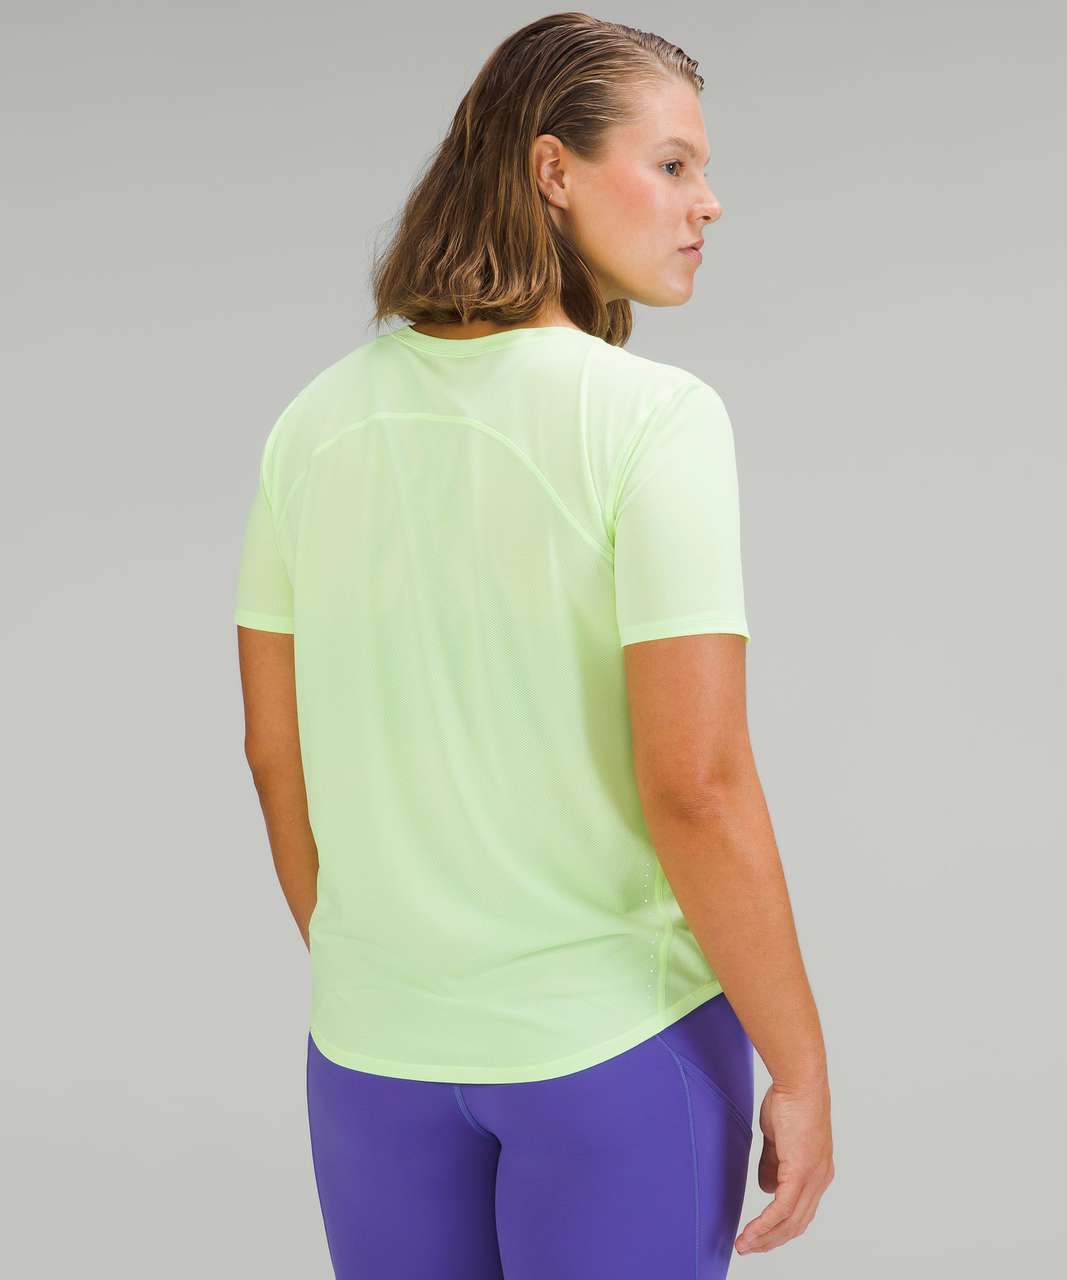 Lululemon High-Neck Running and Training T-Shirt - Faded Zap